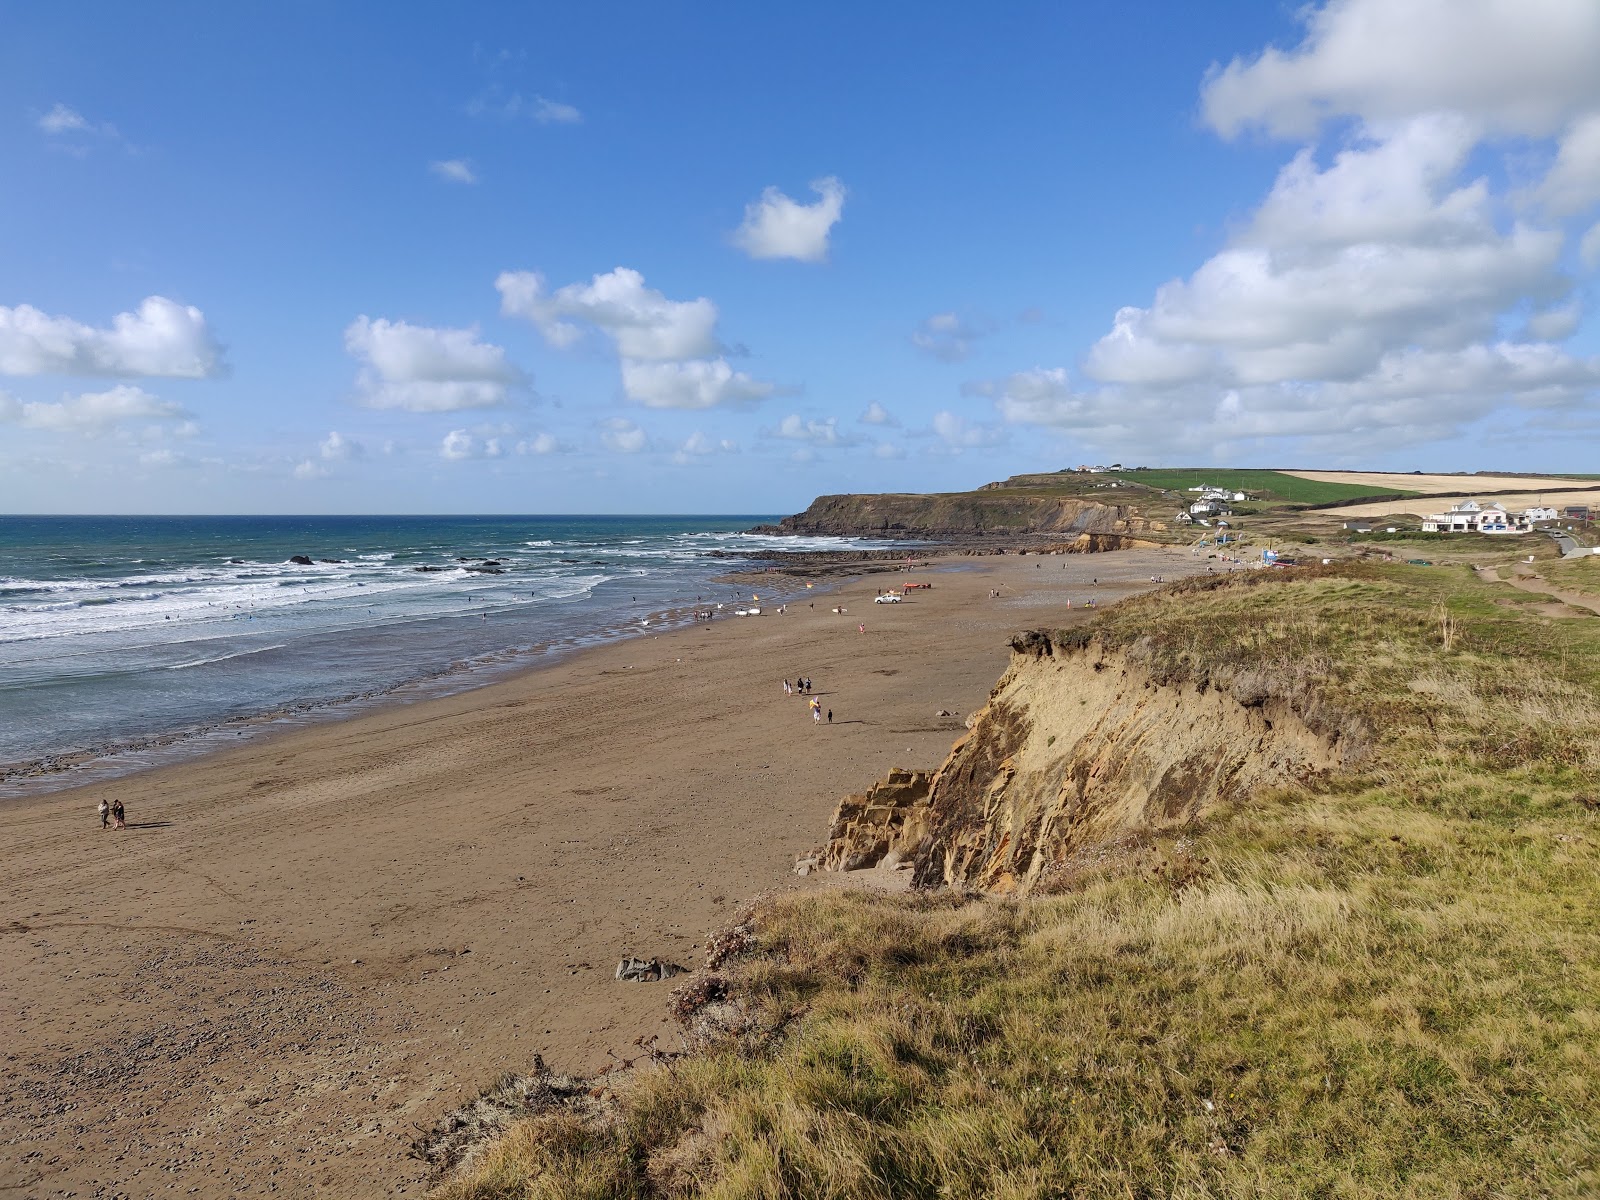 Coast-to-coast, explore the stunning beaches and coastal walks of Devon and Cornwall